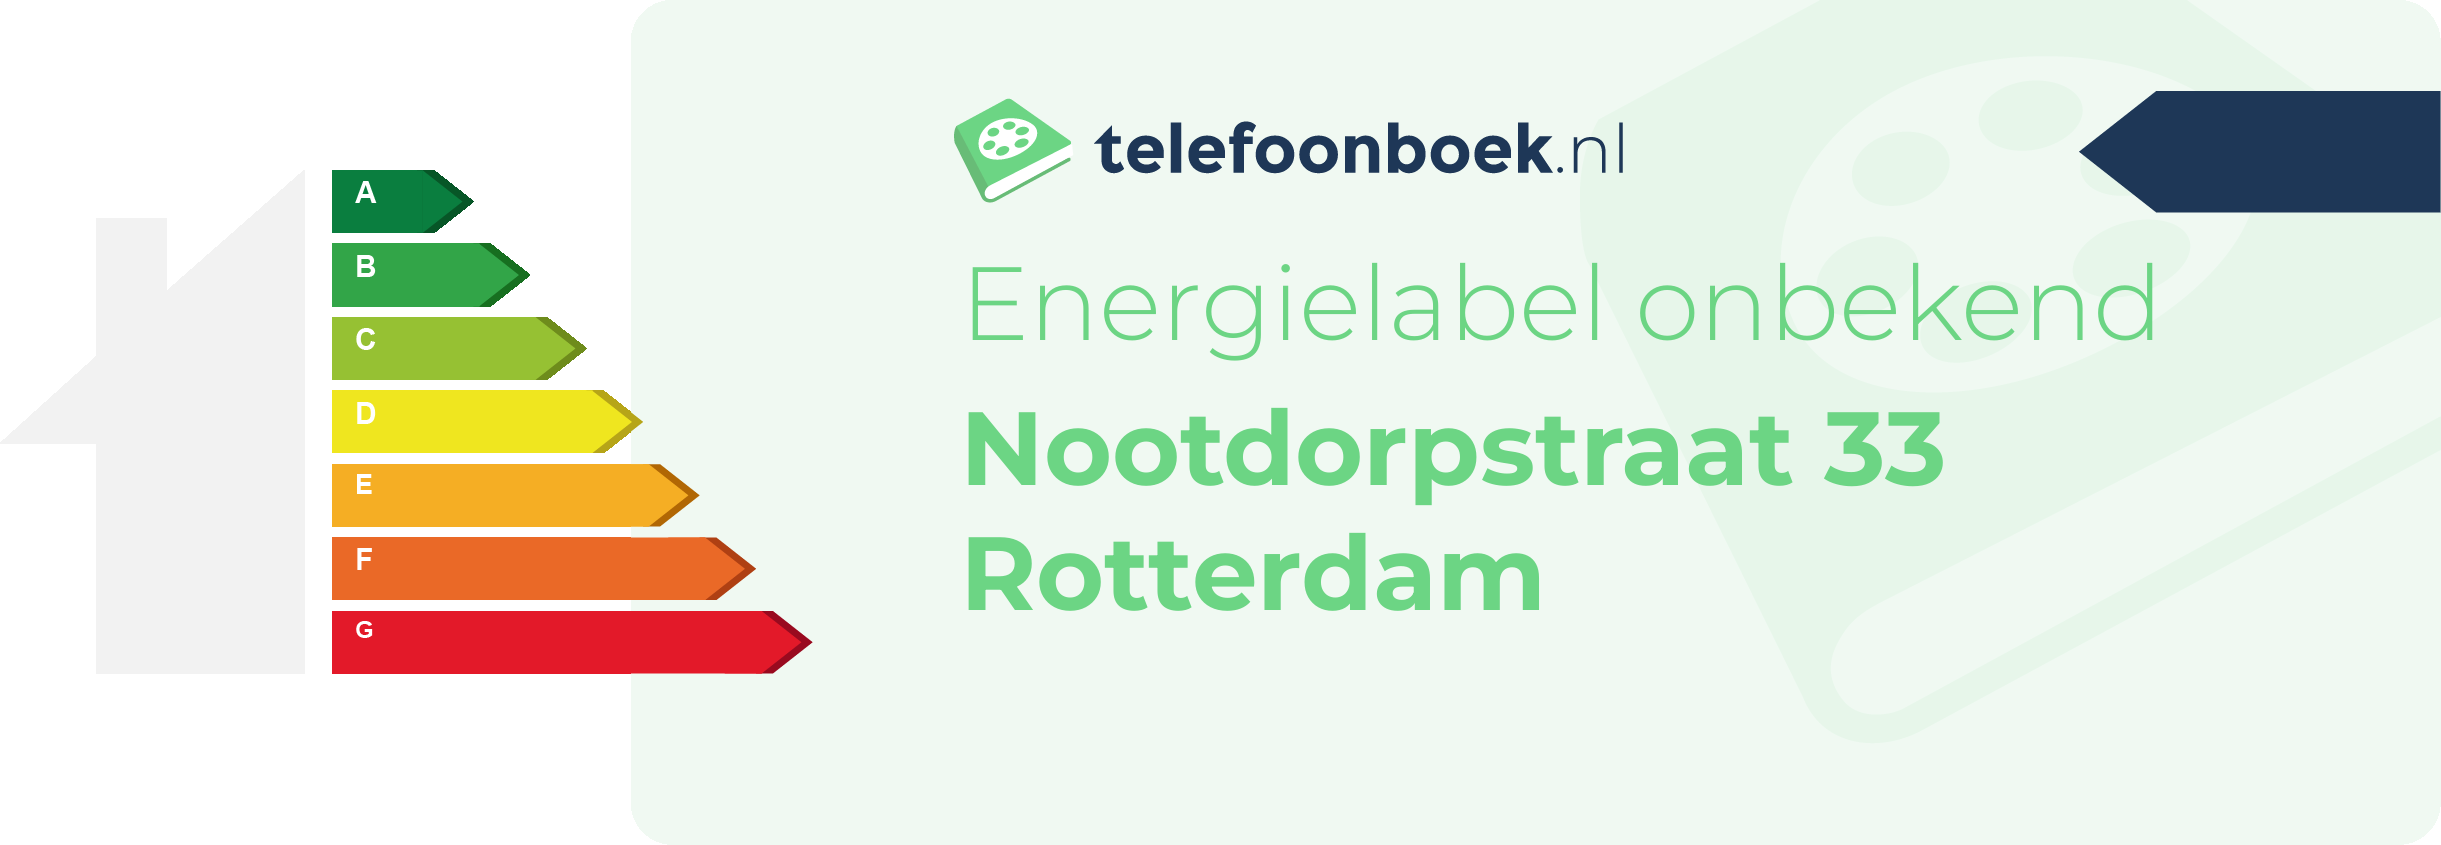 Energielabel Nootdorpstraat 33 Rotterdam